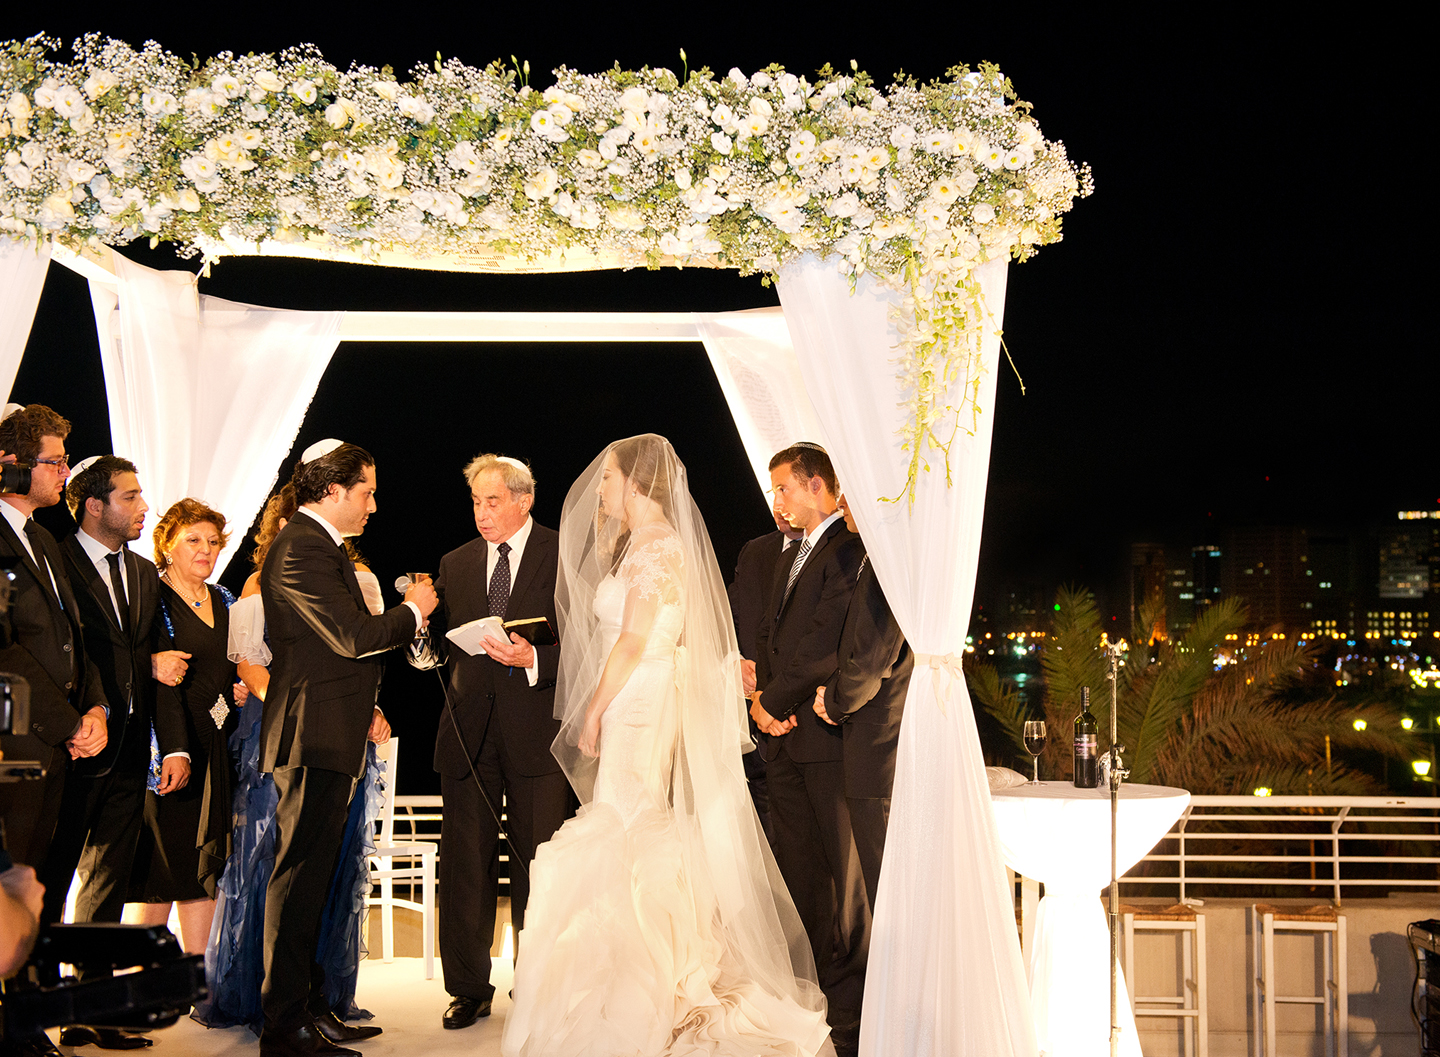 The Plaza Hotel wedding